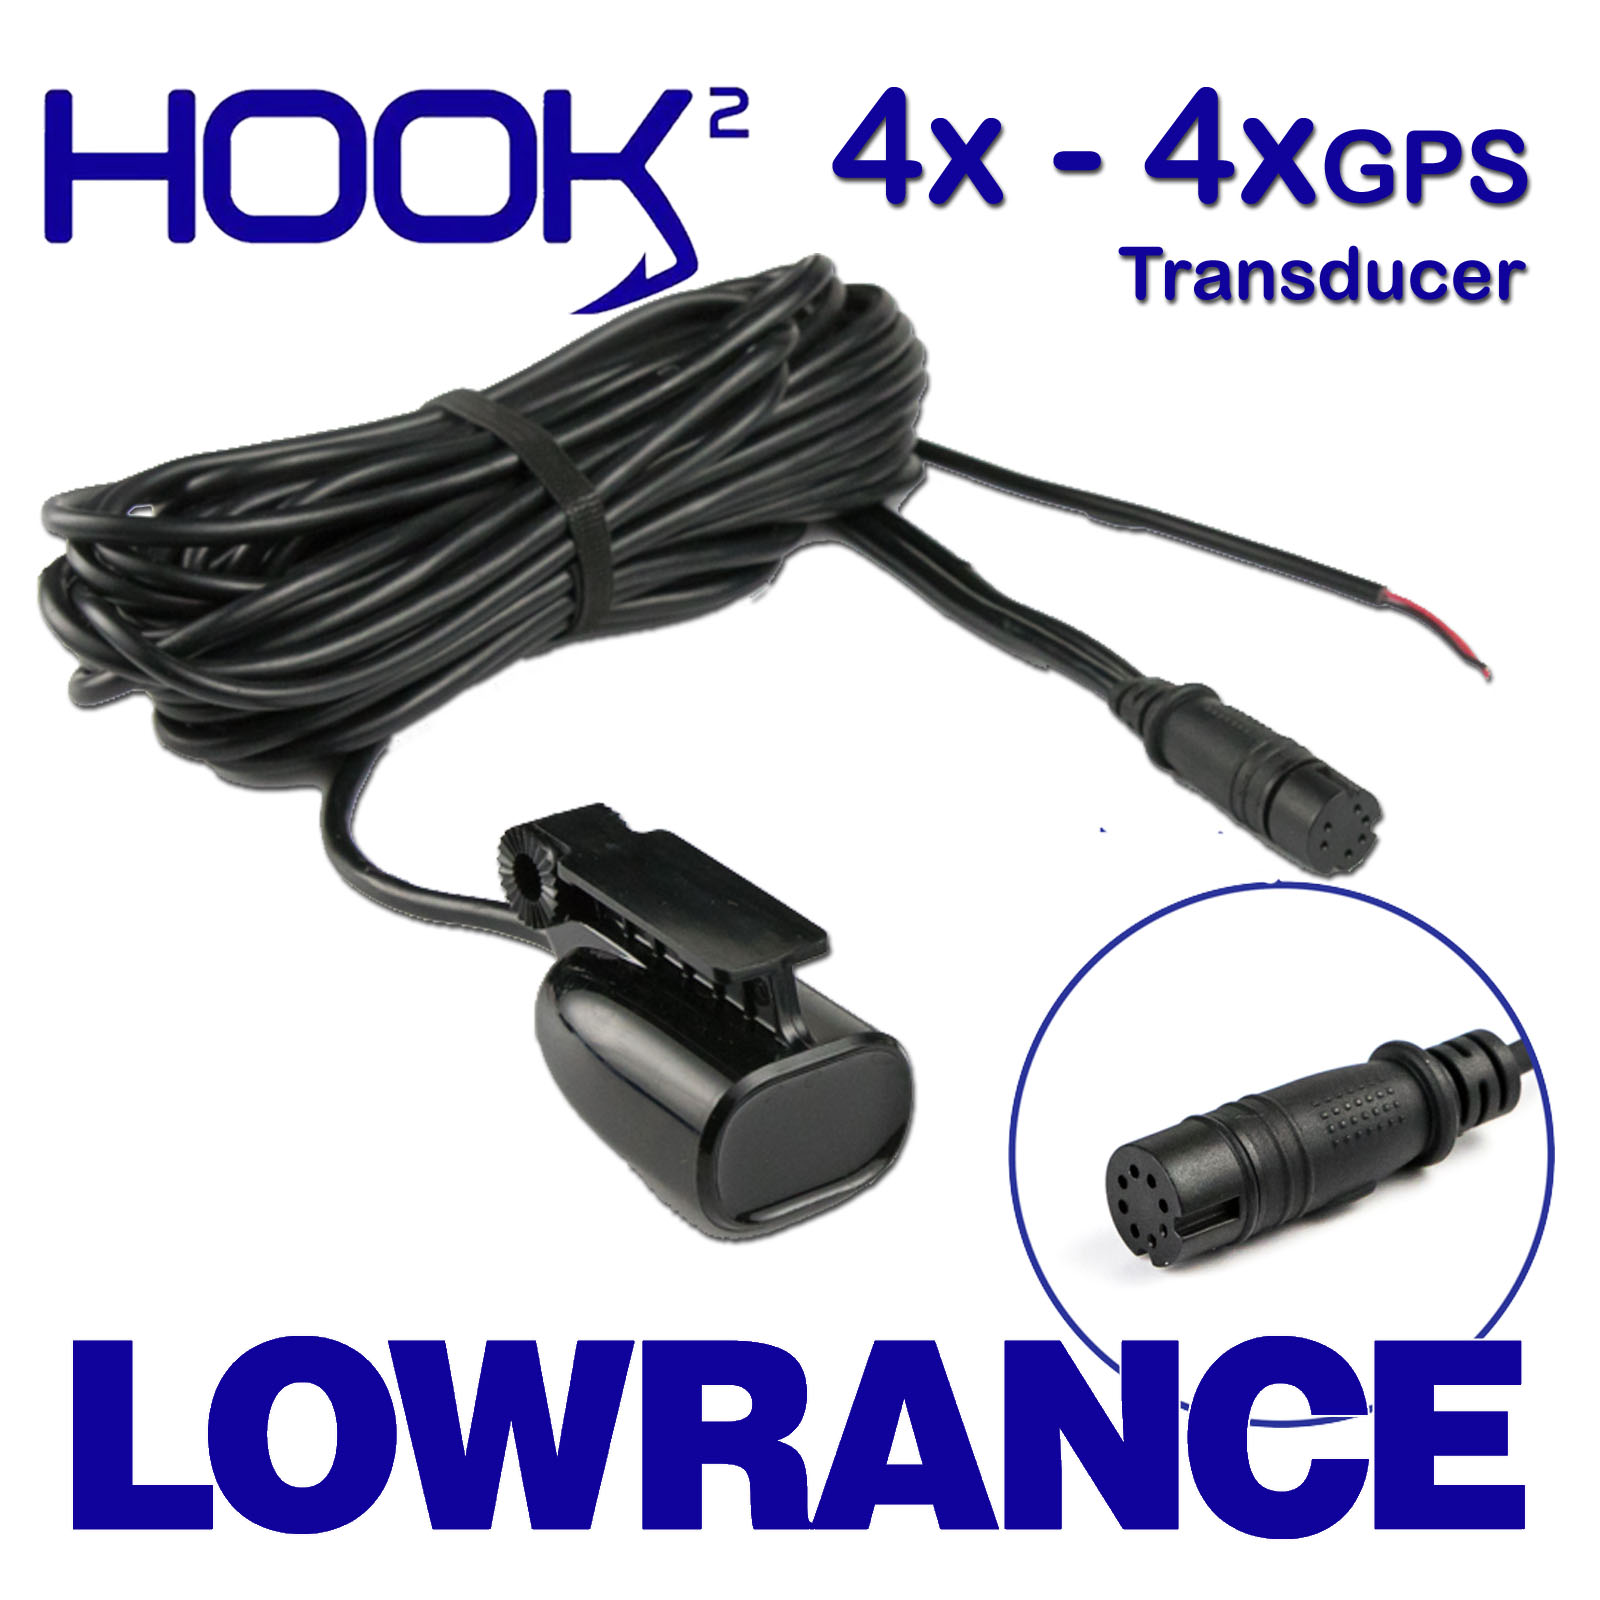 Lowrance Bullet Skimmer Transducer Suits Hook2 4x & 4x GPS Models Transom  Mount Part#: 000-14027-001